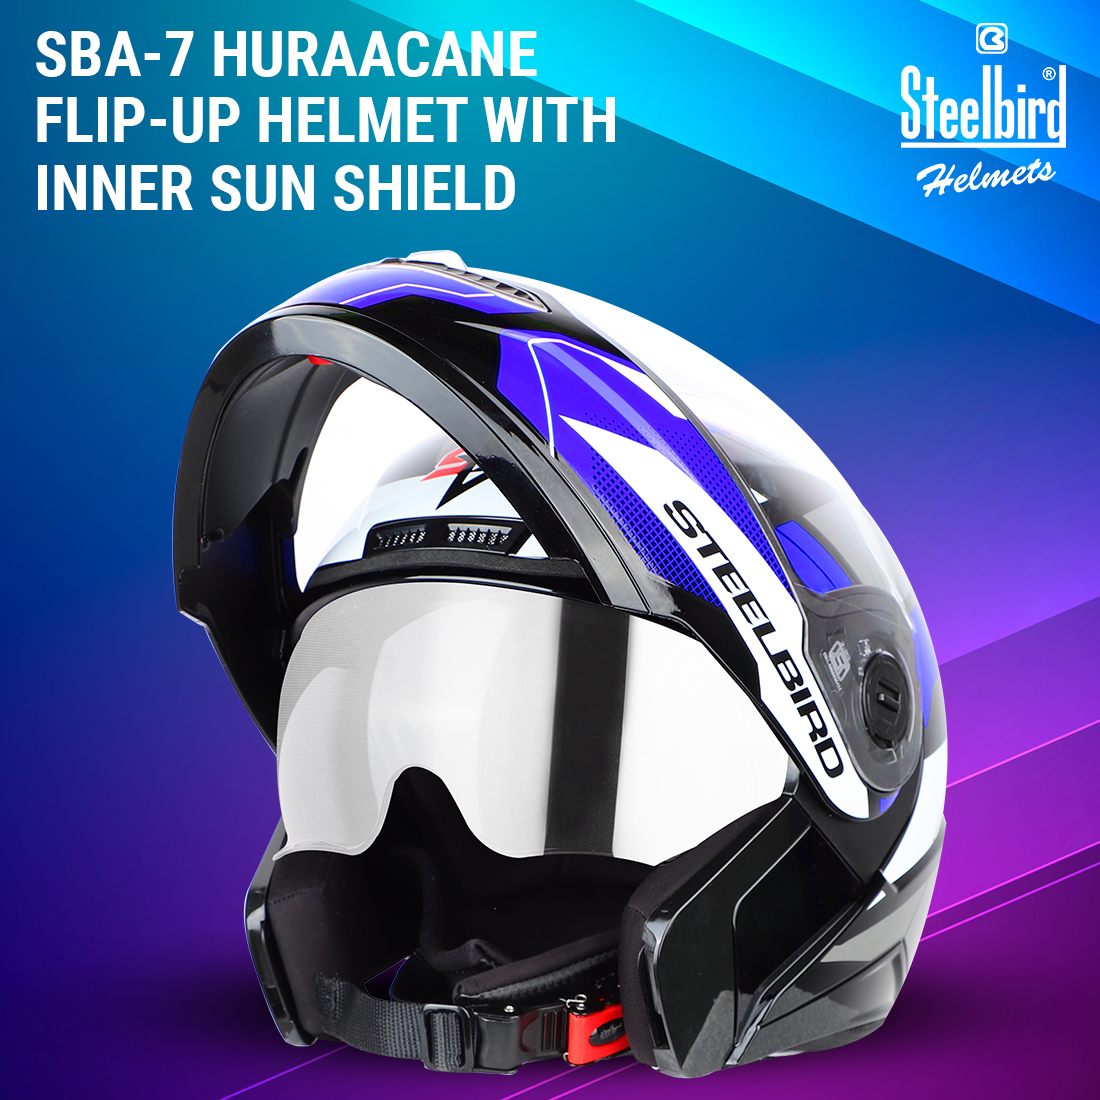 Steelbird SBA-7 Huracan ISI Certified Flip-Up Helmet For Men And Women With Inner Sun Shield (Matt Black Blue)